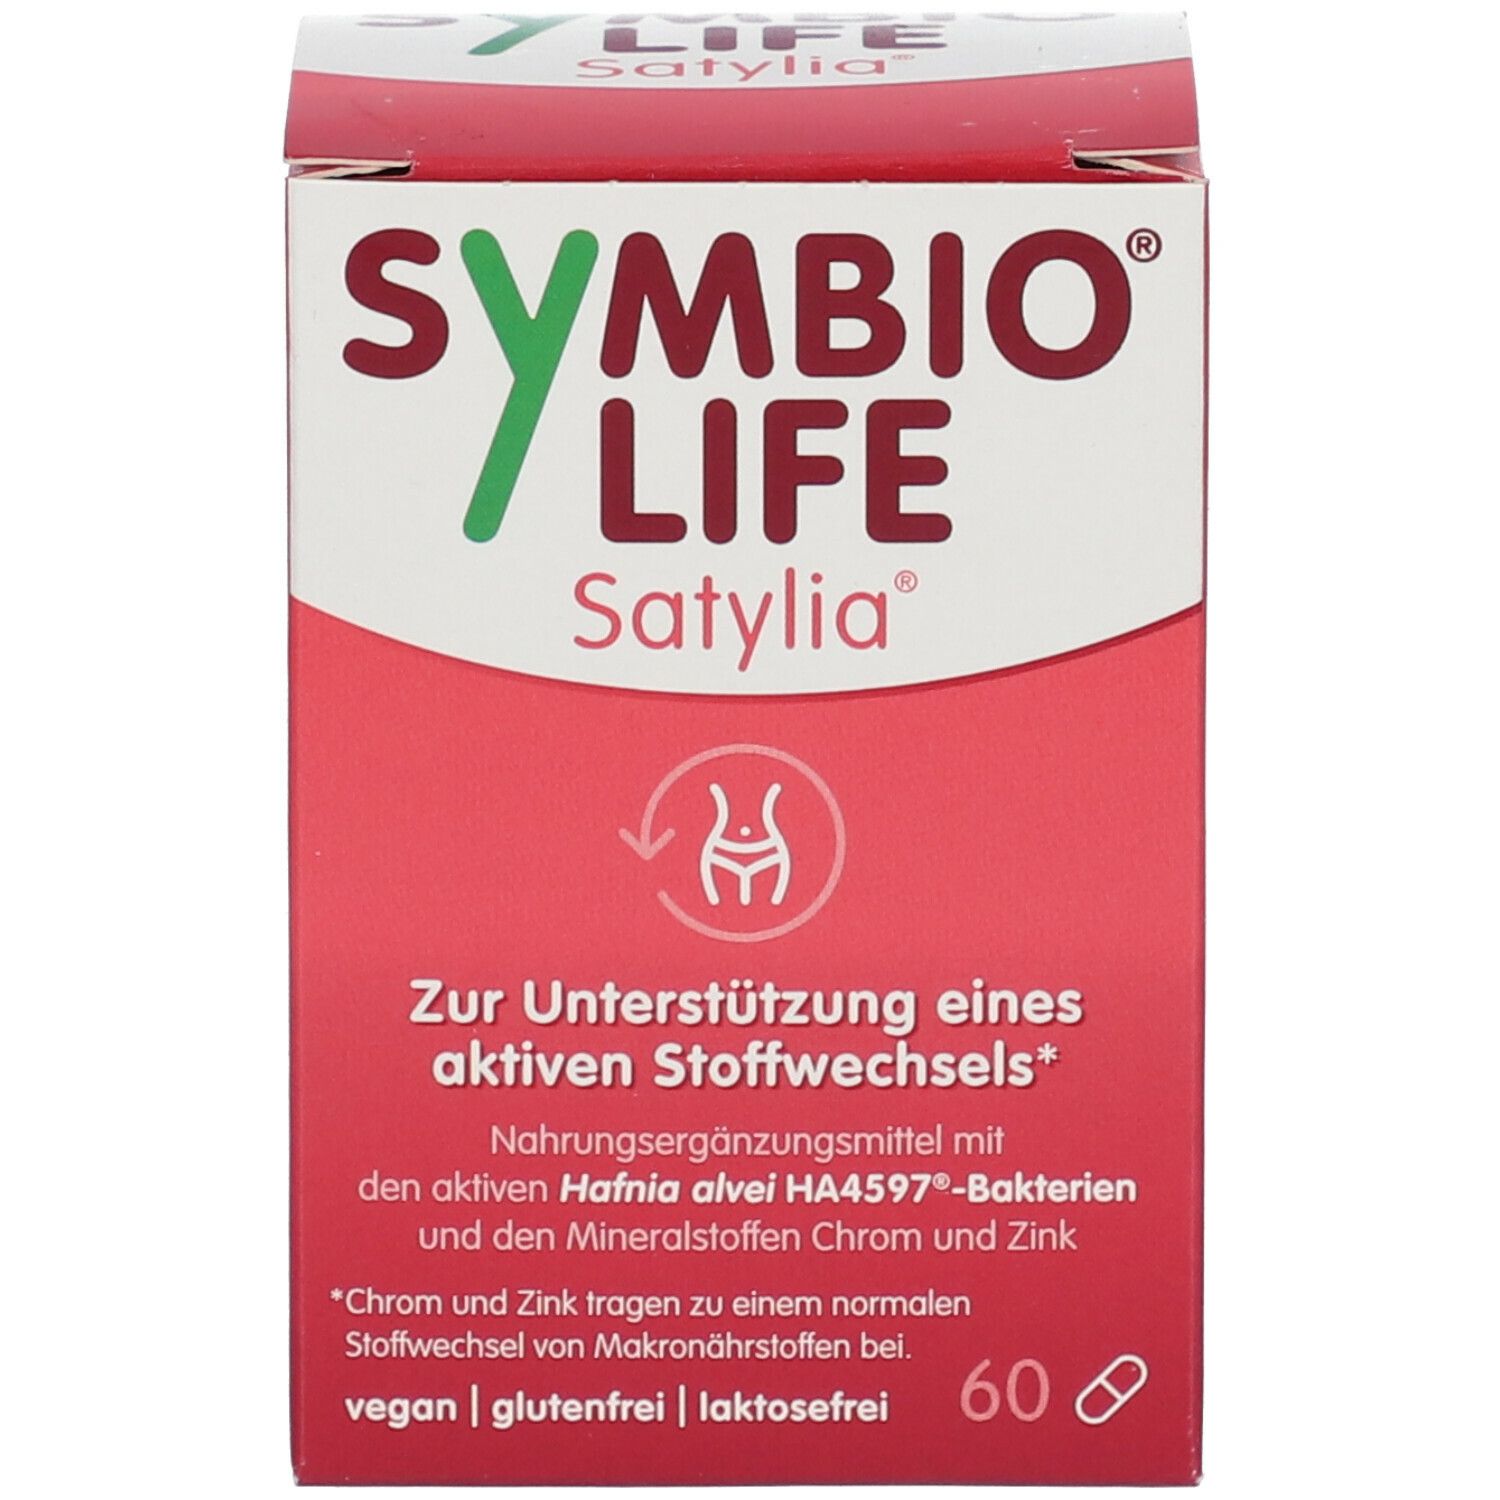 SymbioLife® Satylia